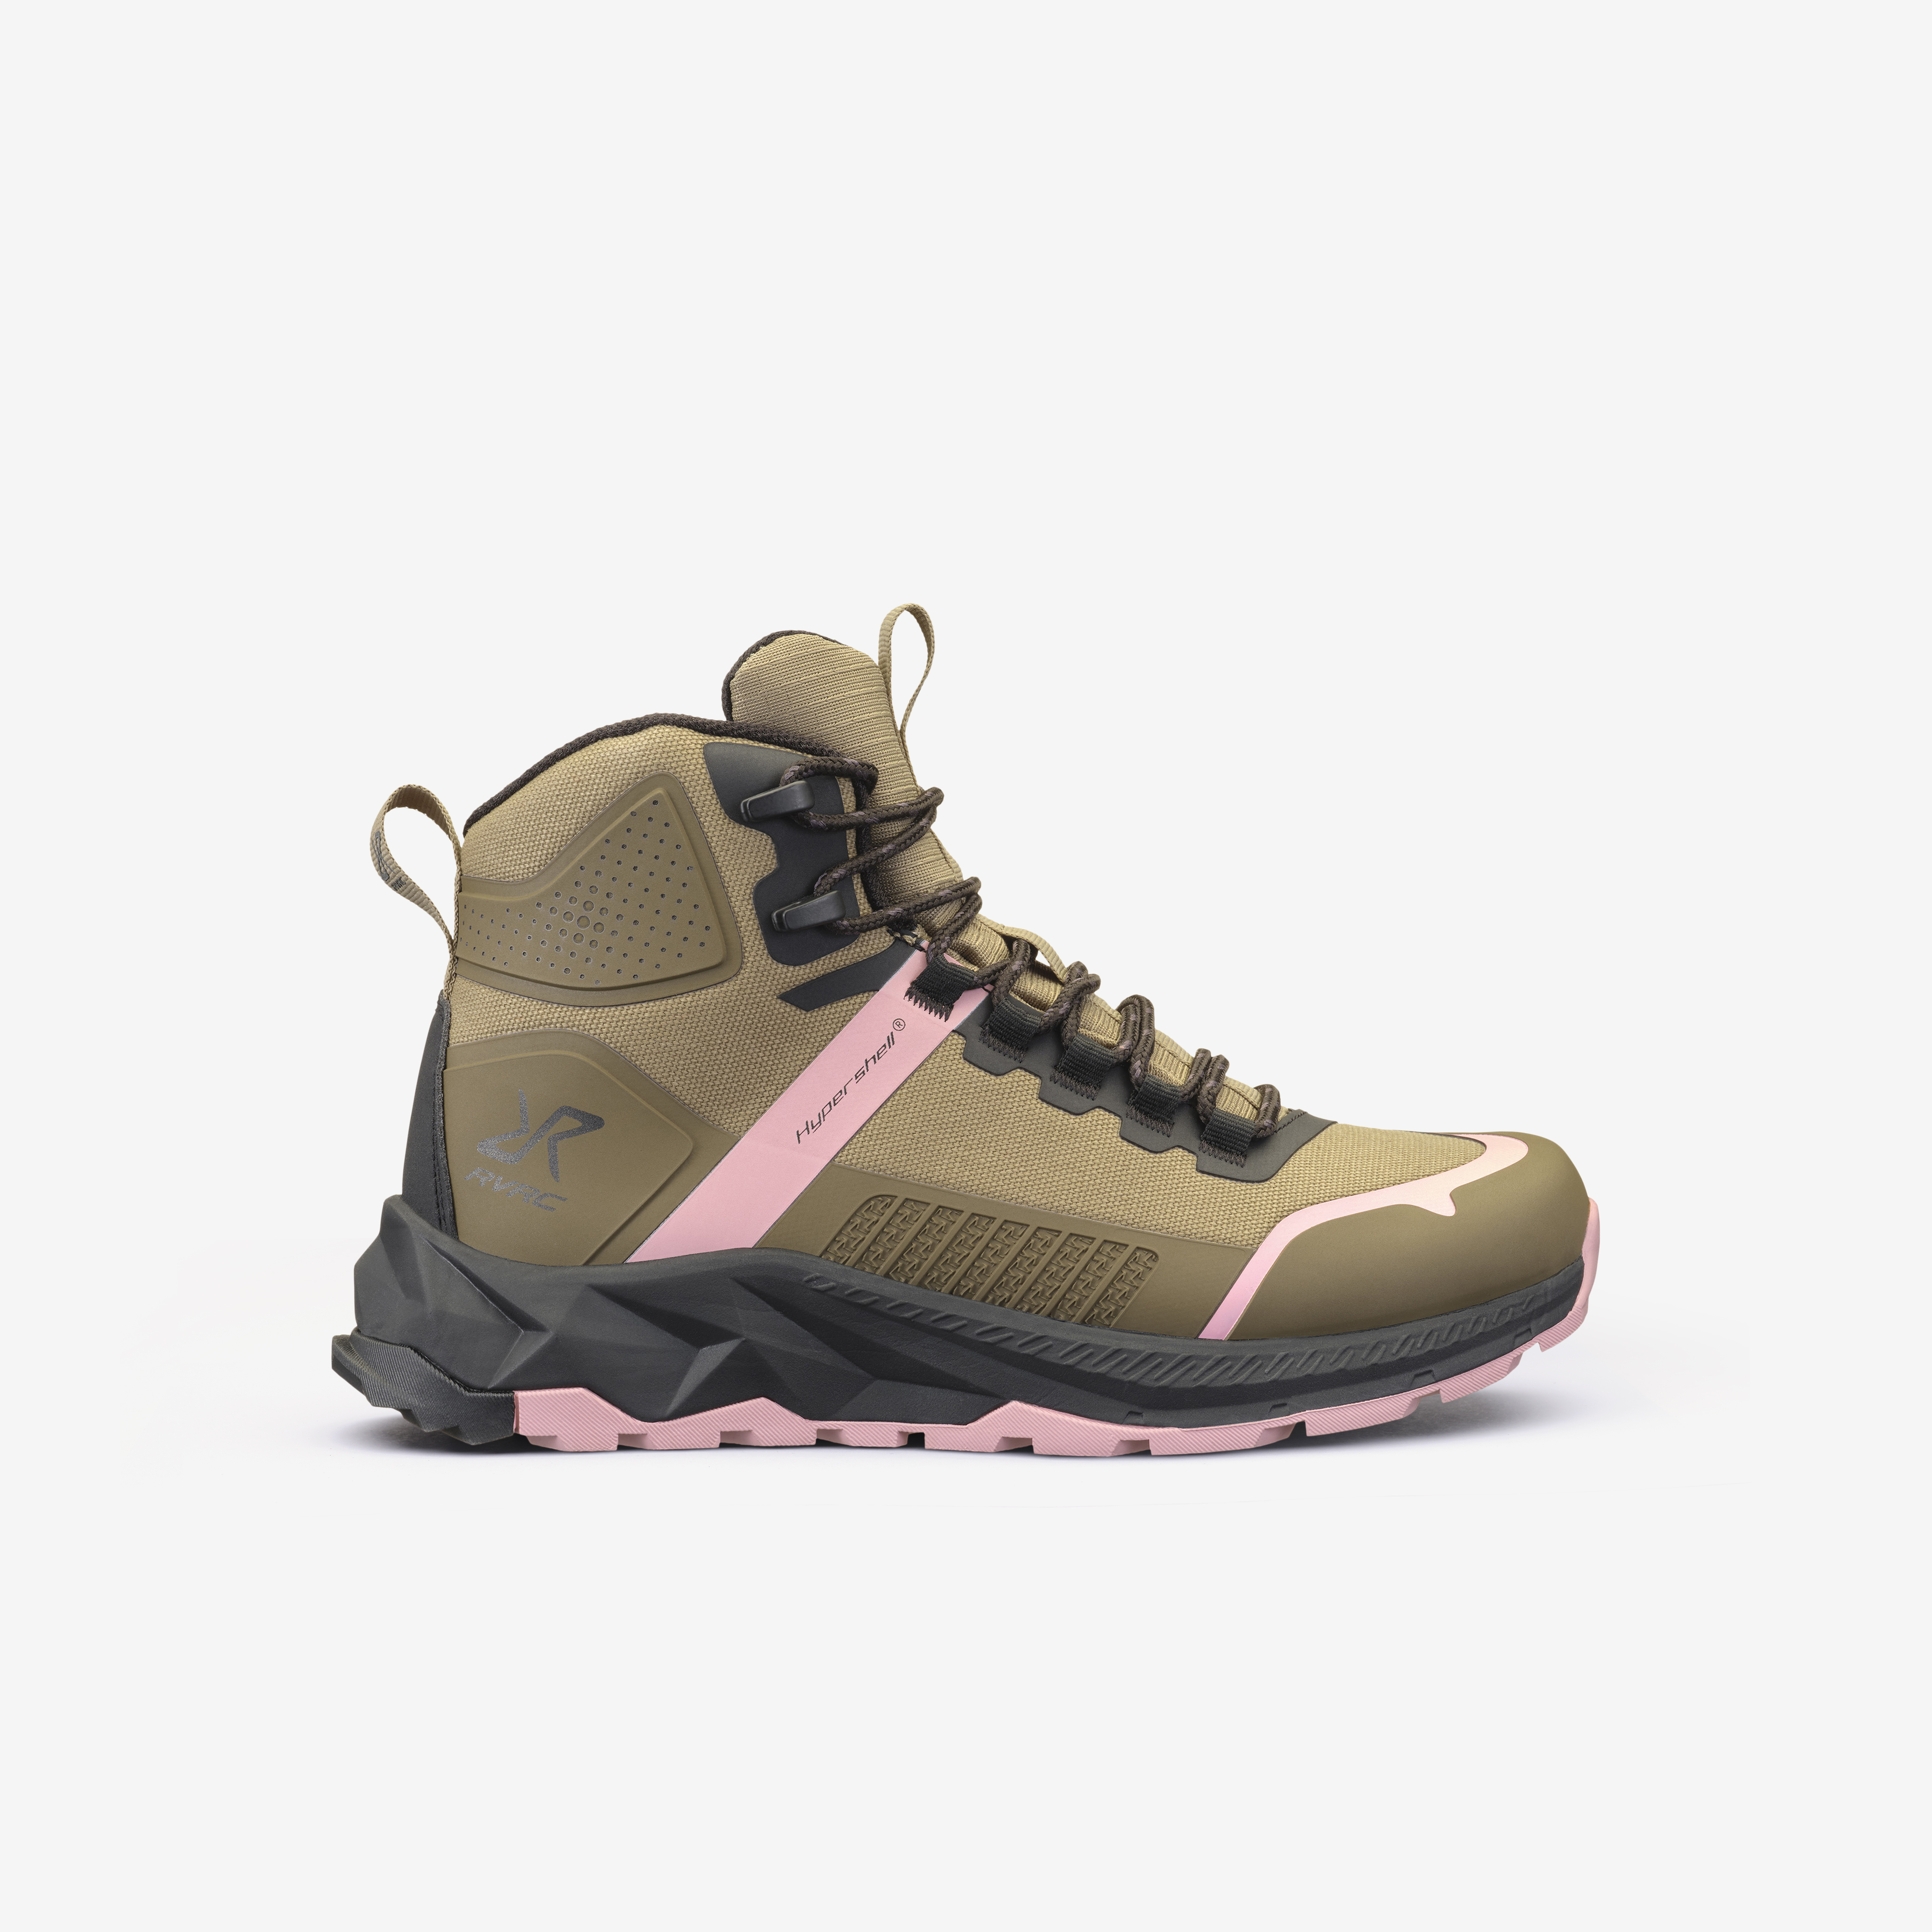 Phantom Trail Mid Waterproof Hiking Boots Khaki/Dusty Pink Damen